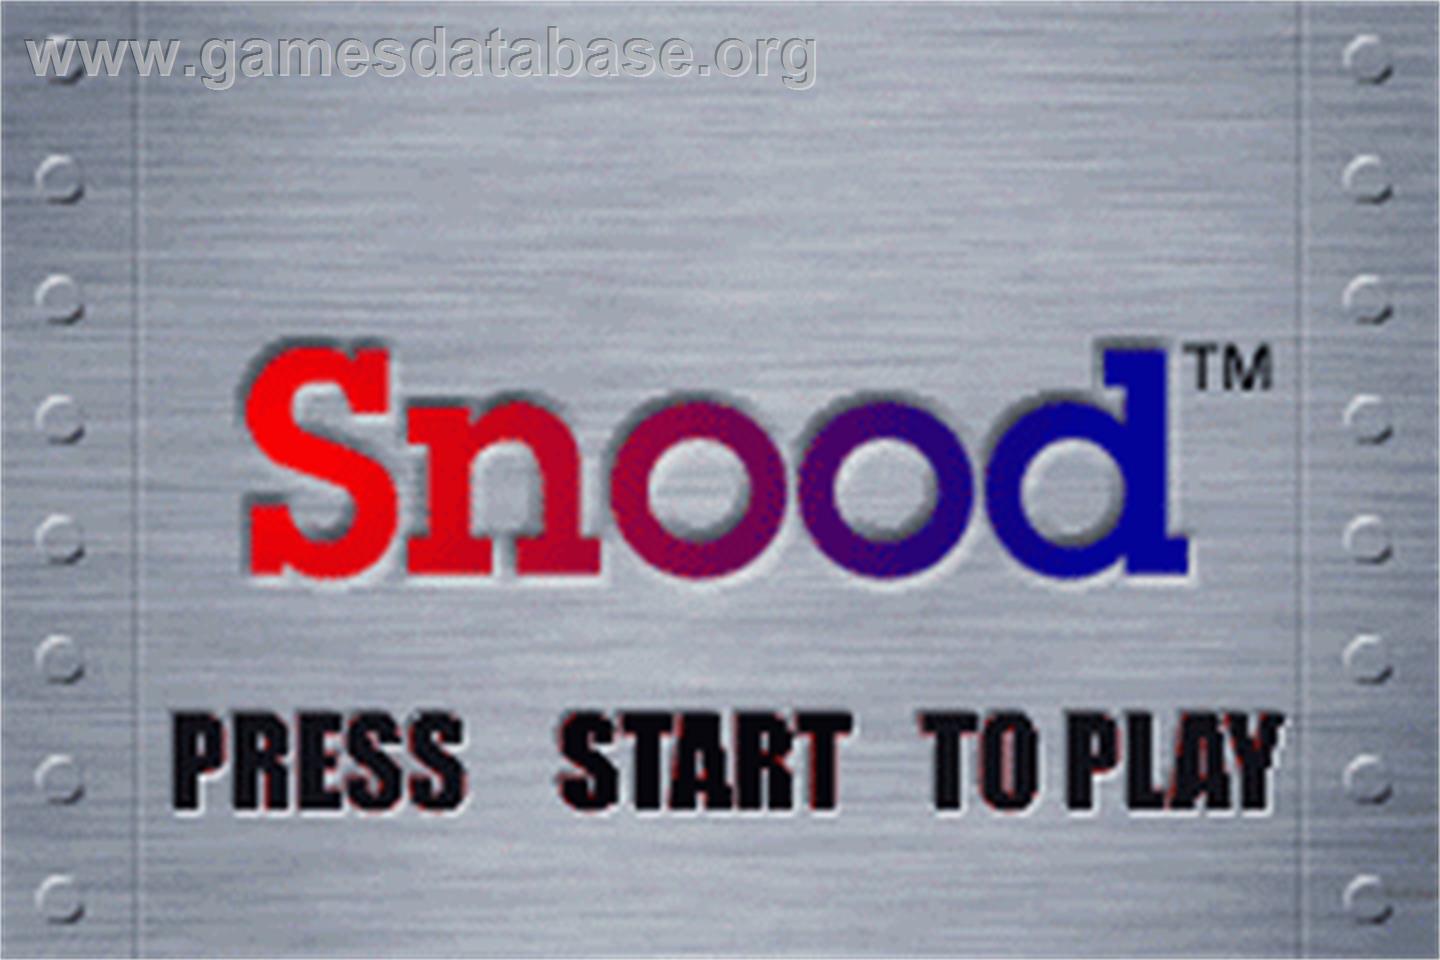 Snood - Nintendo Game Boy Advance - Artwork - Title Screen